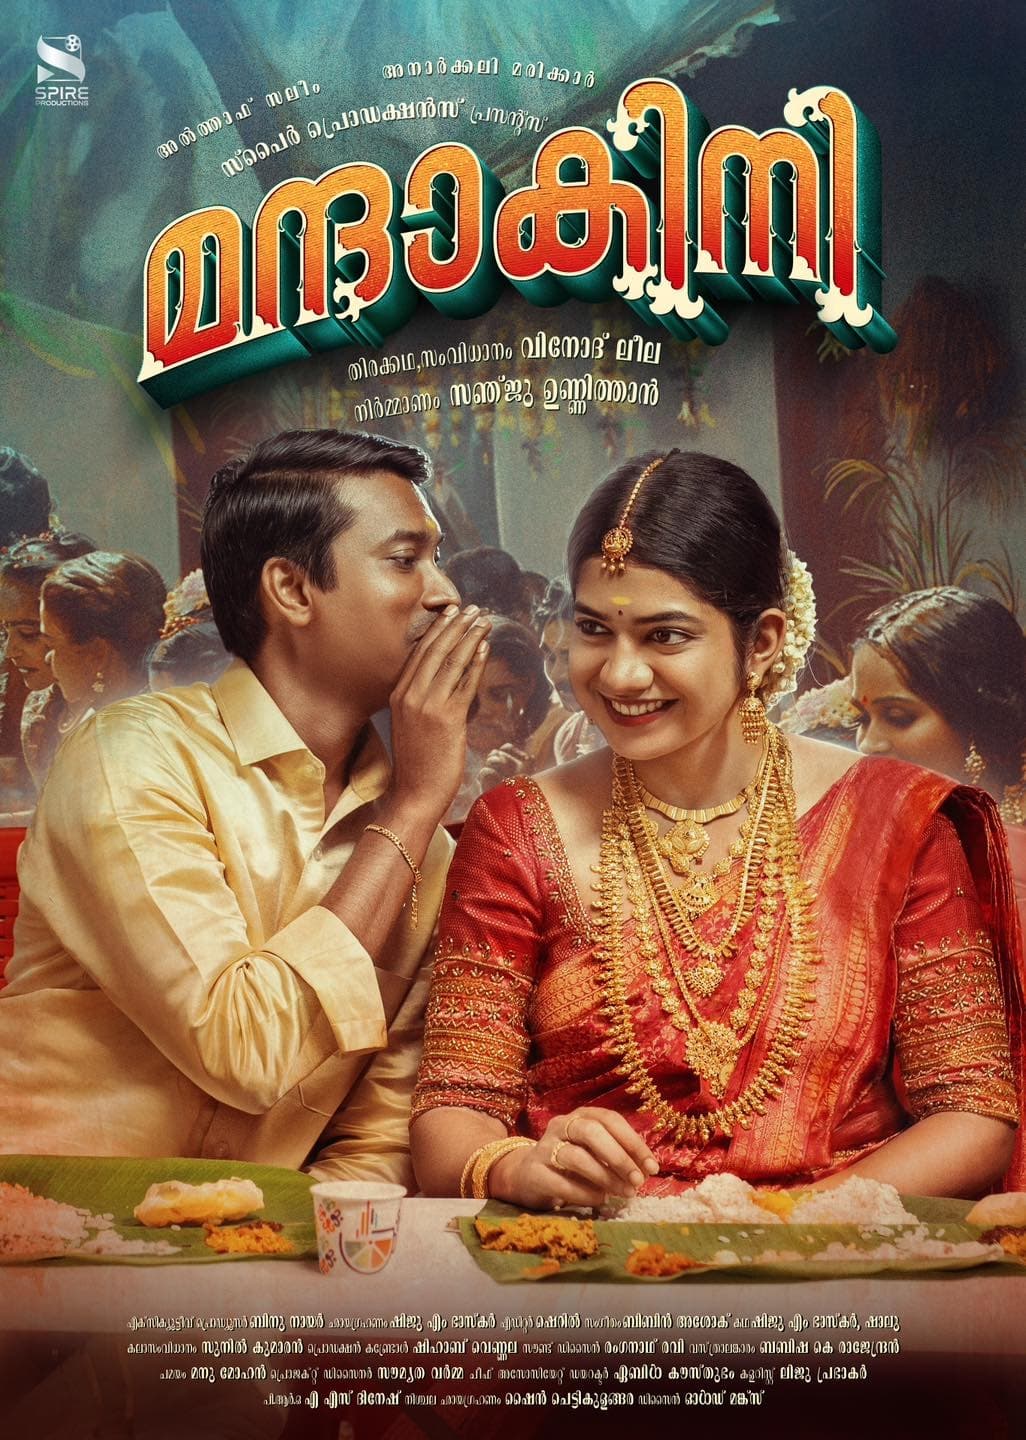 Poster for the movie "Mandakini"